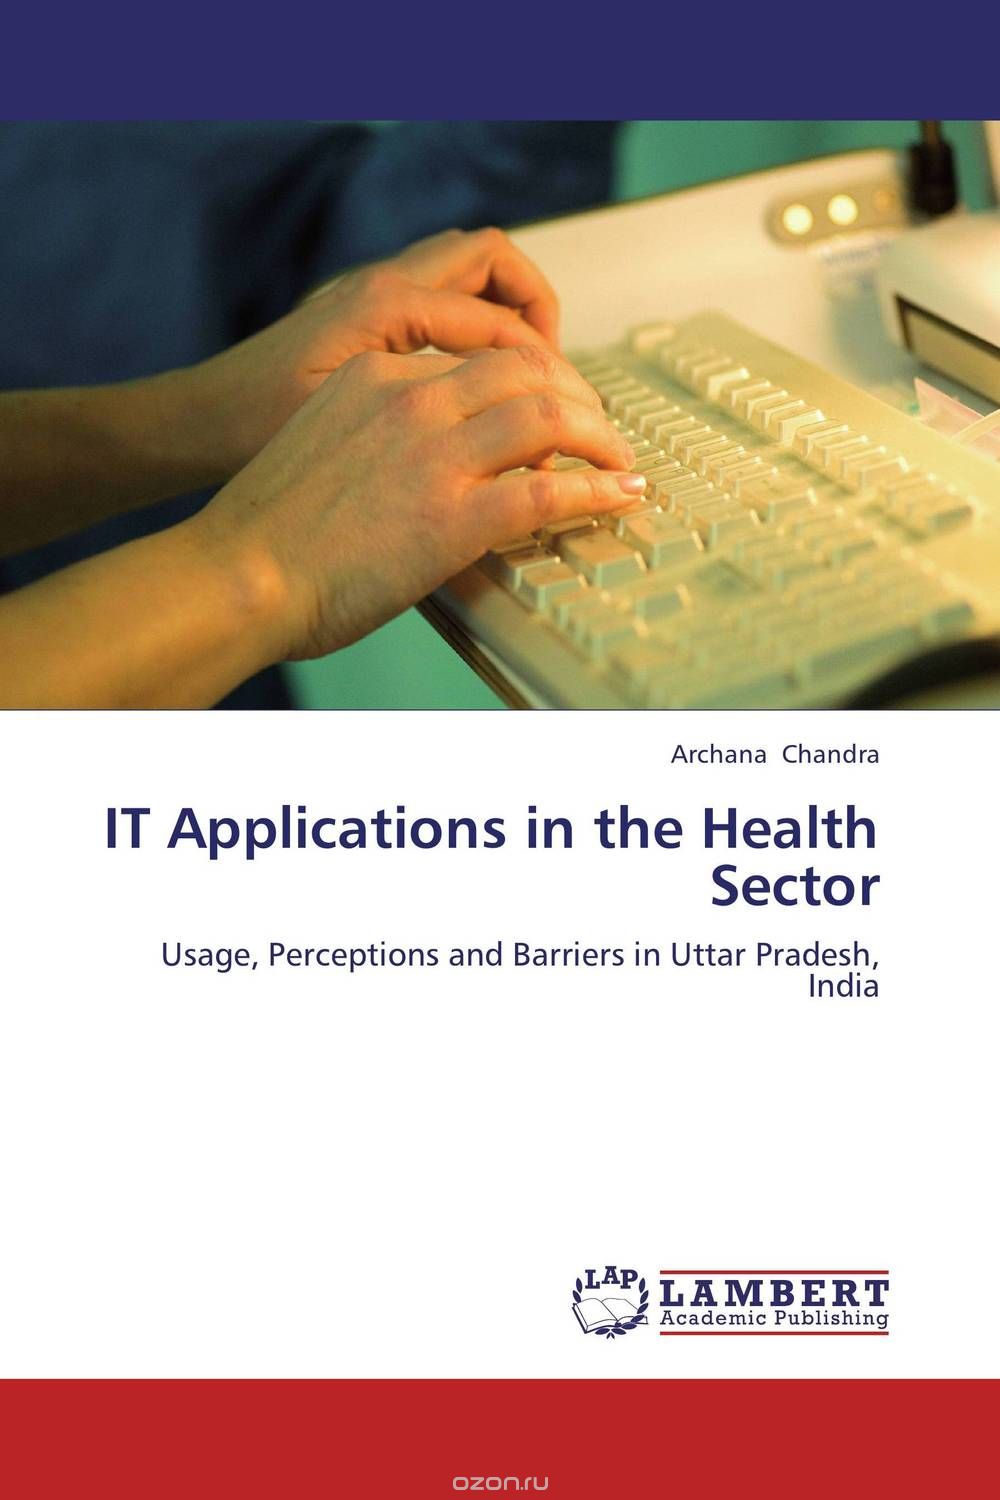 Скачать книгу "IT Applications in the Health Sector"